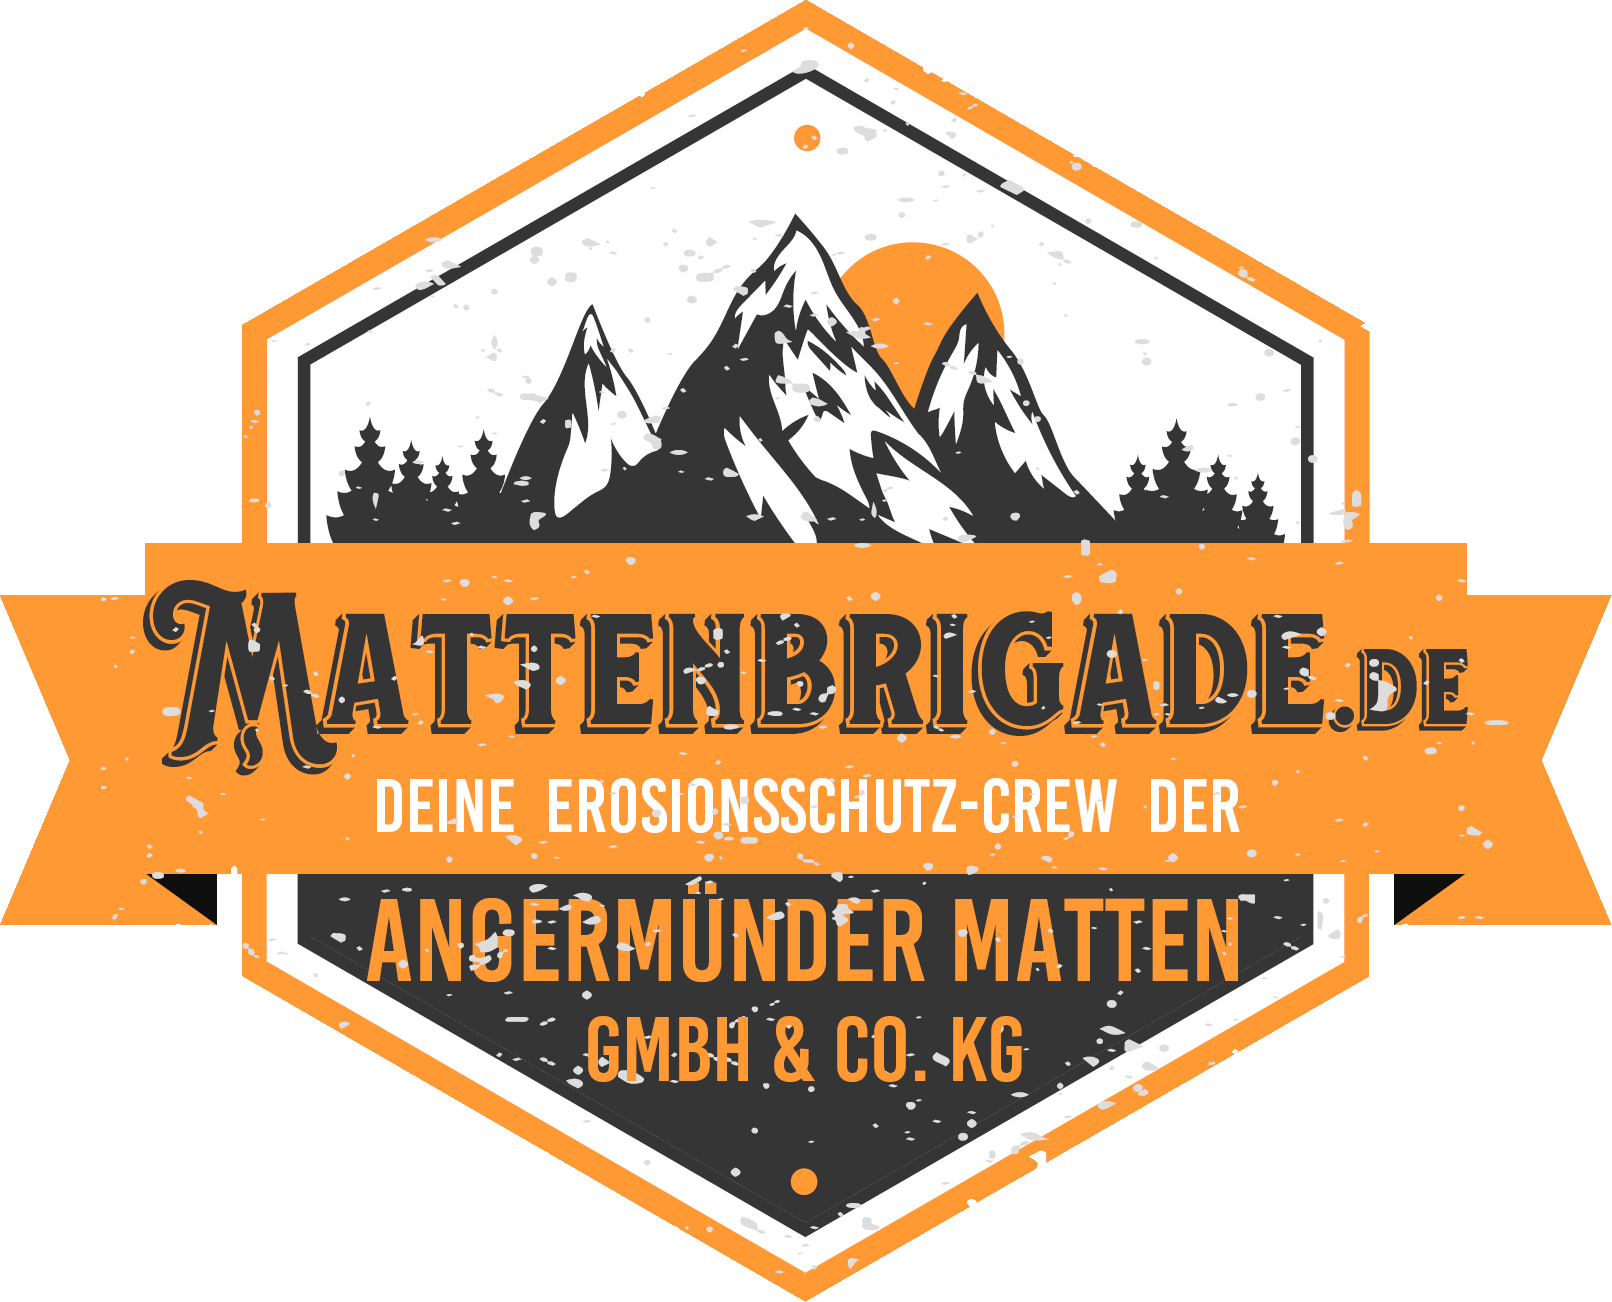 AngermA¼nder Matten GmbH & Co. KG